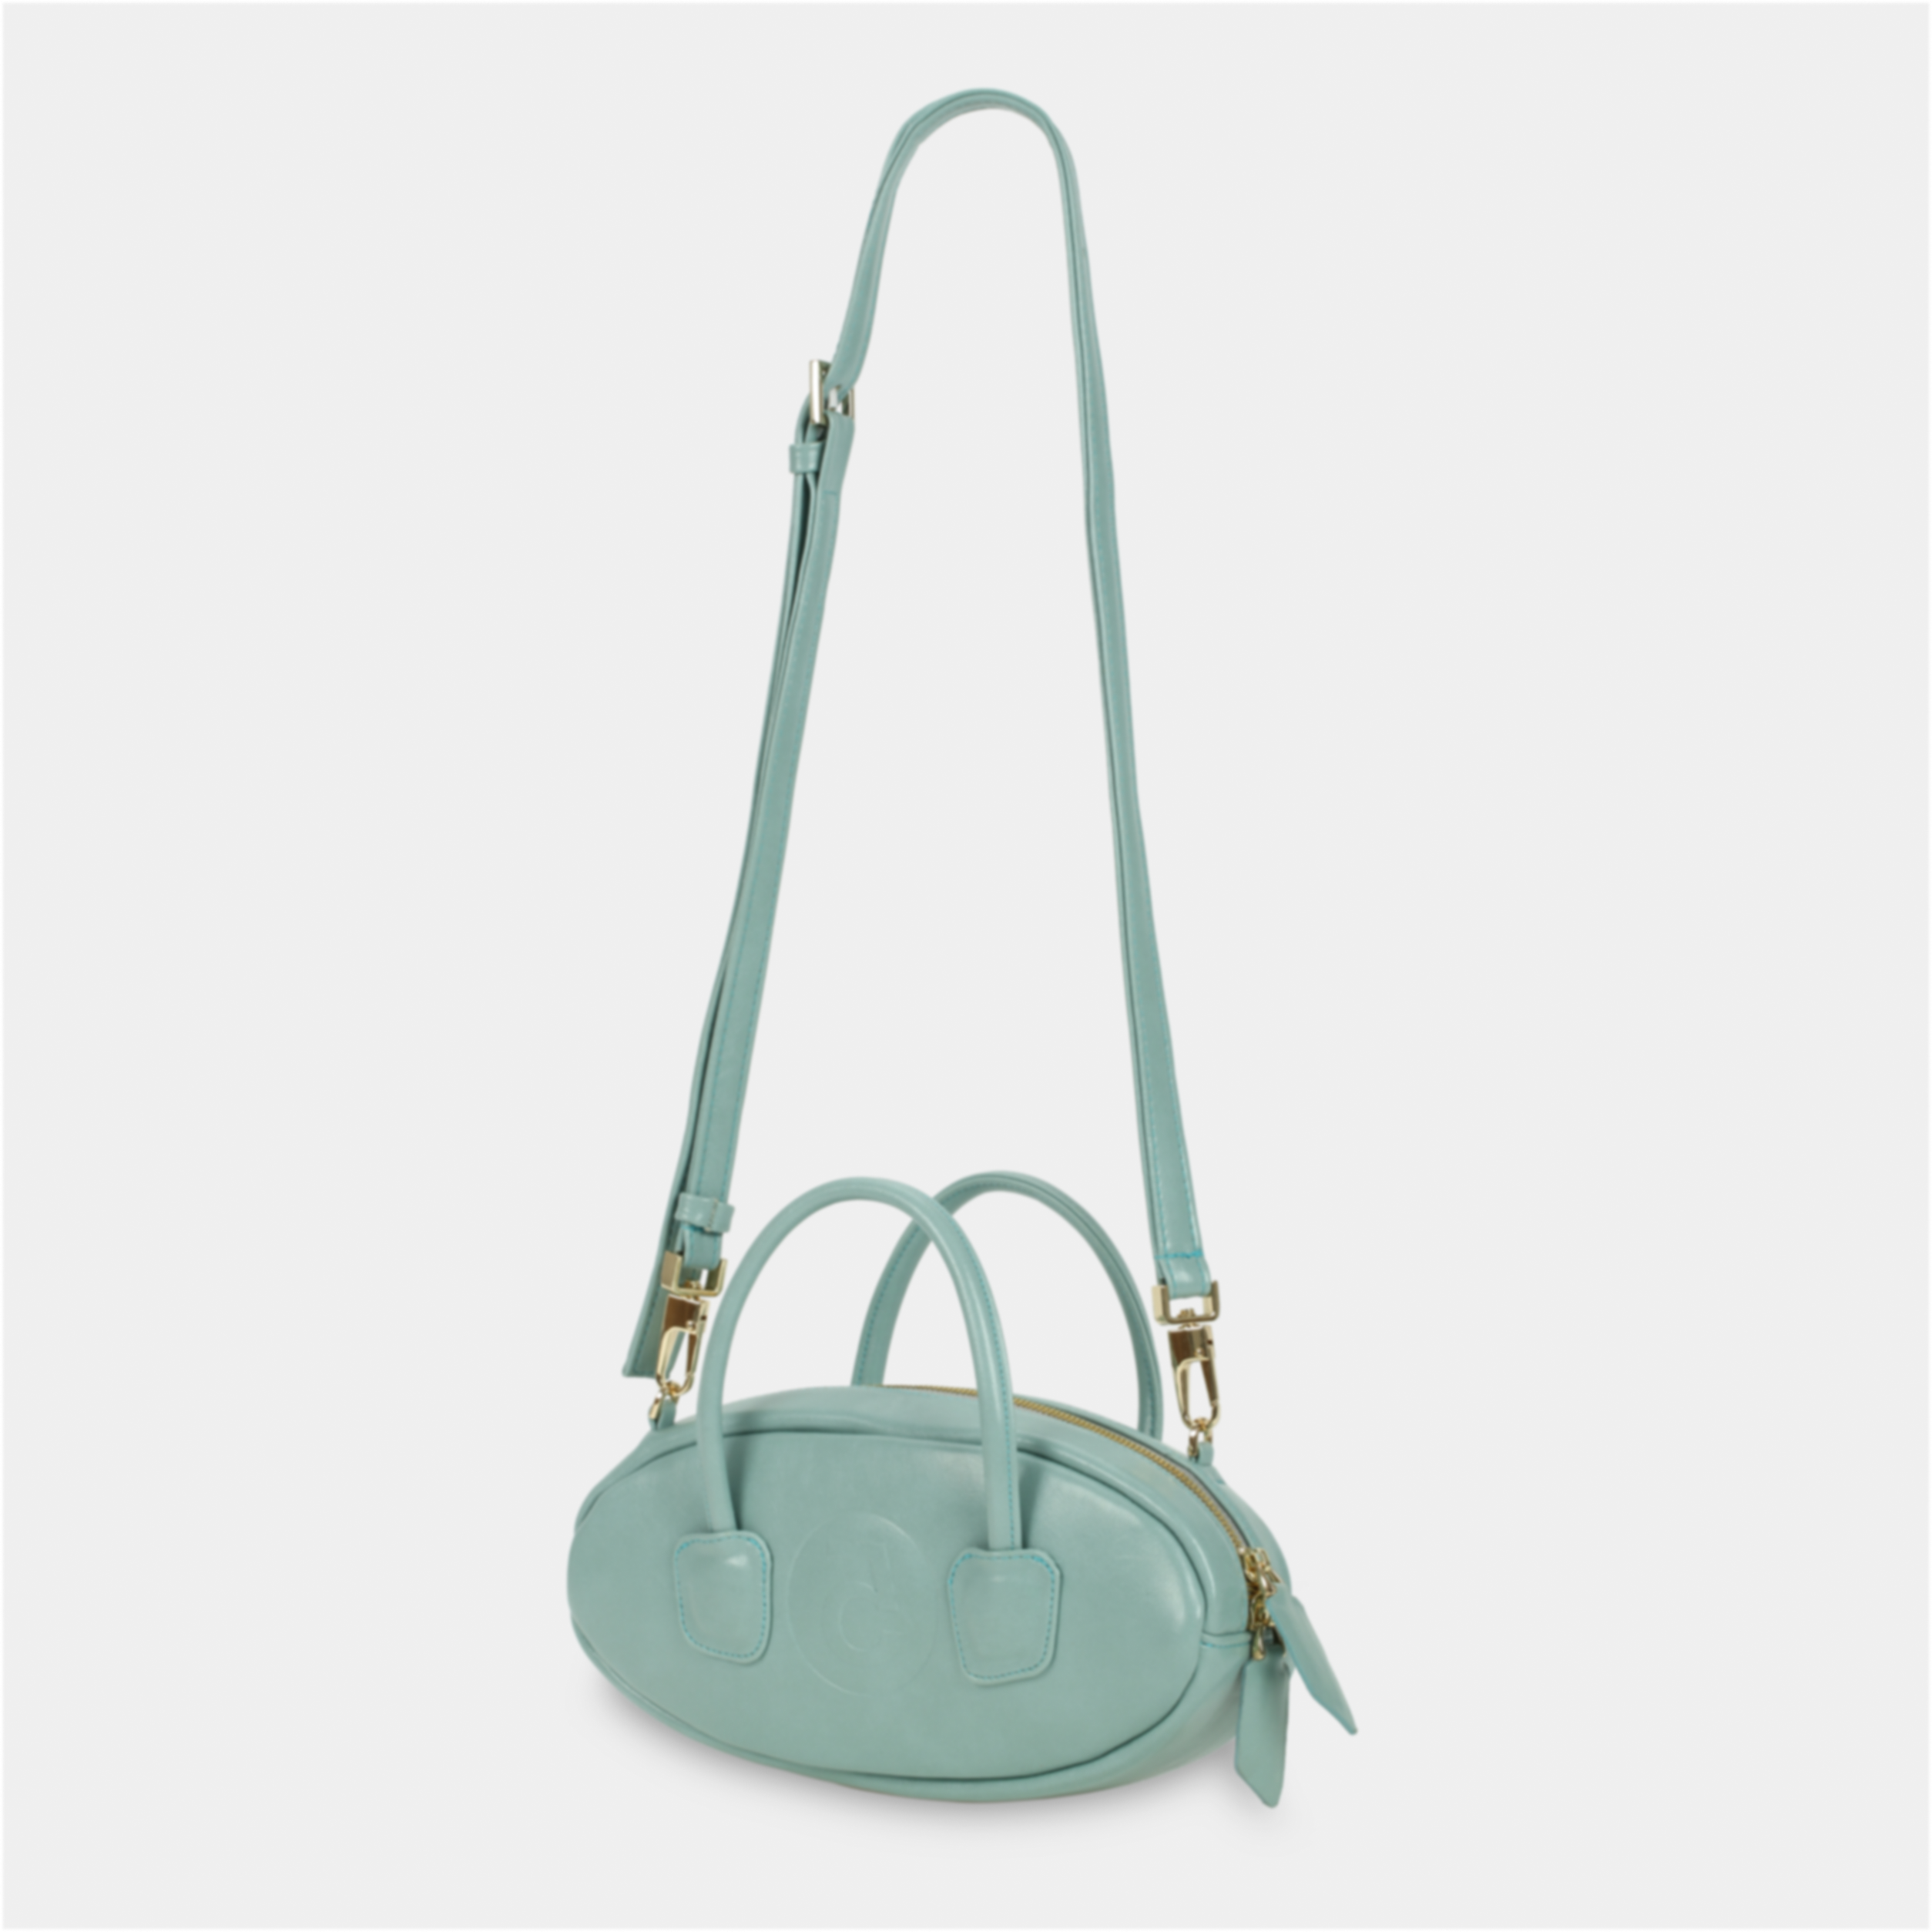 EGG handbag in pastel turquoise